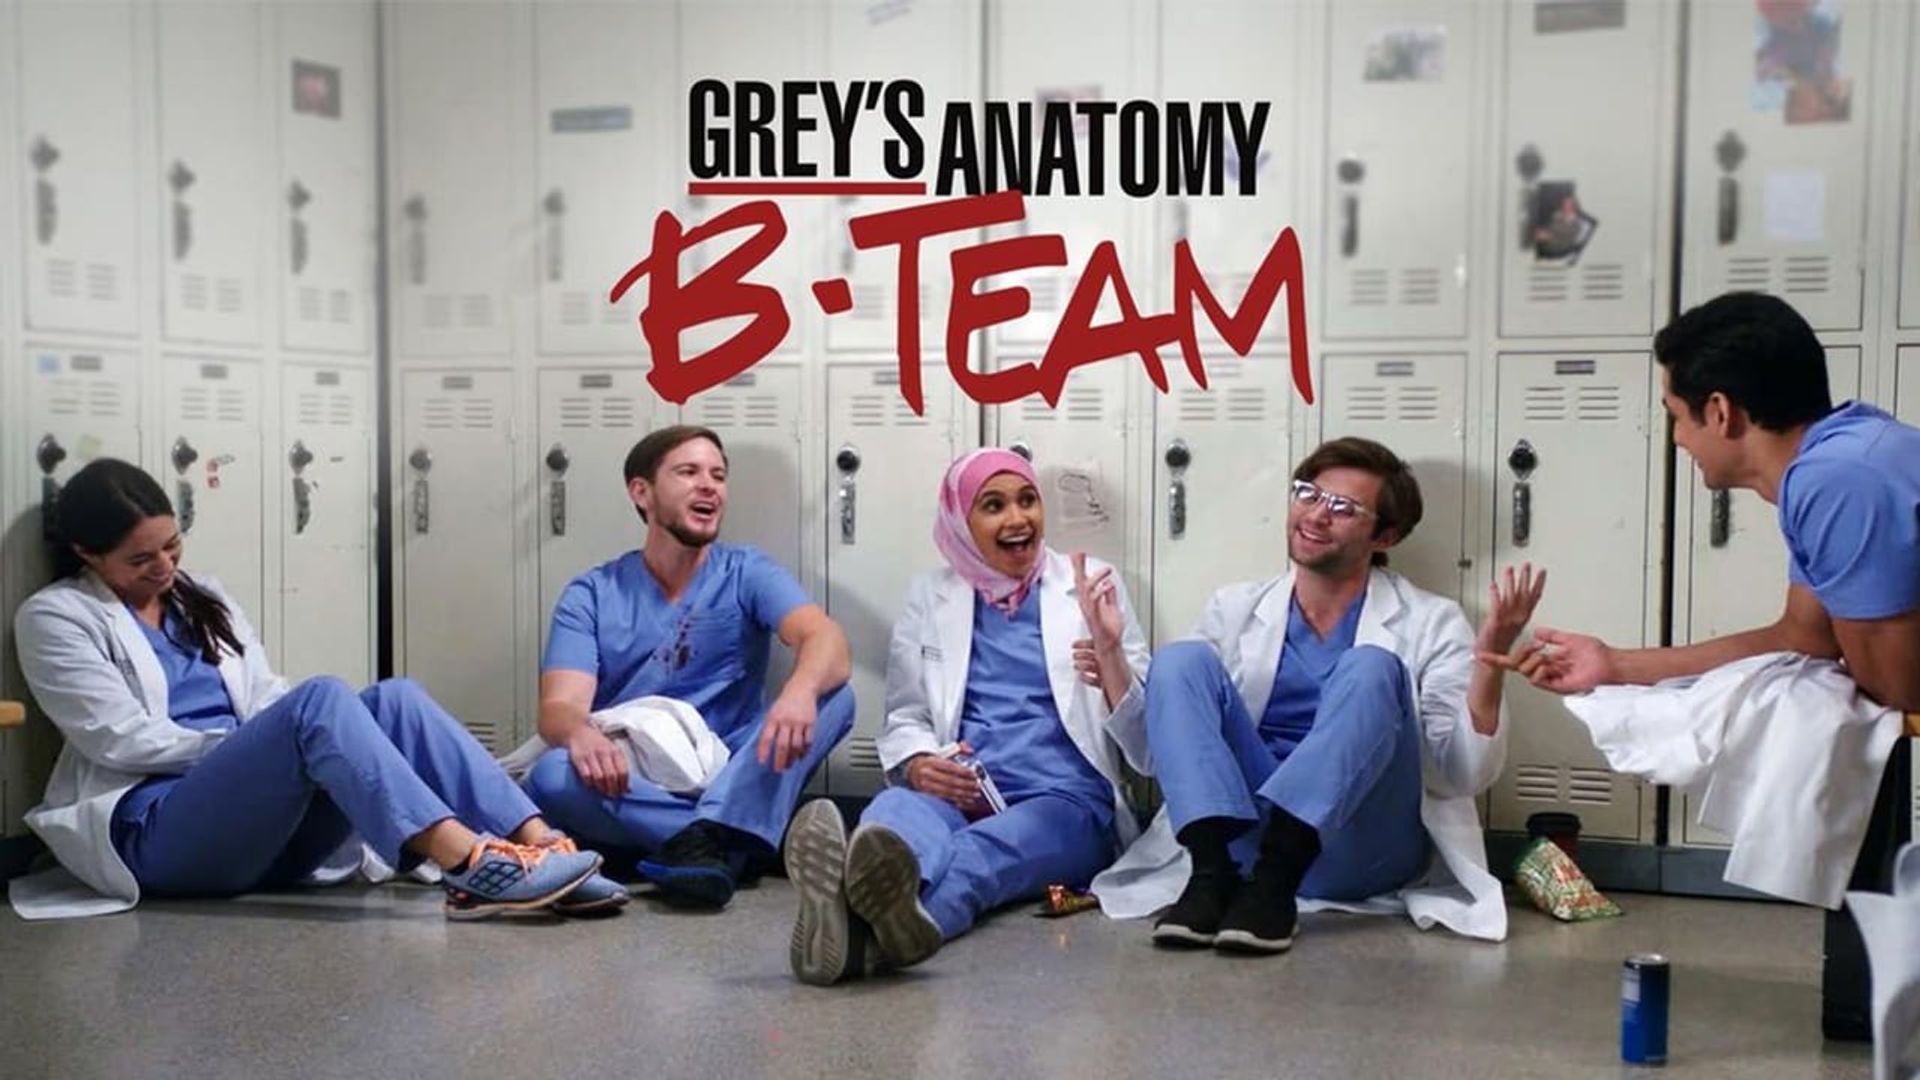 Grey's Anatomy: B-Team background